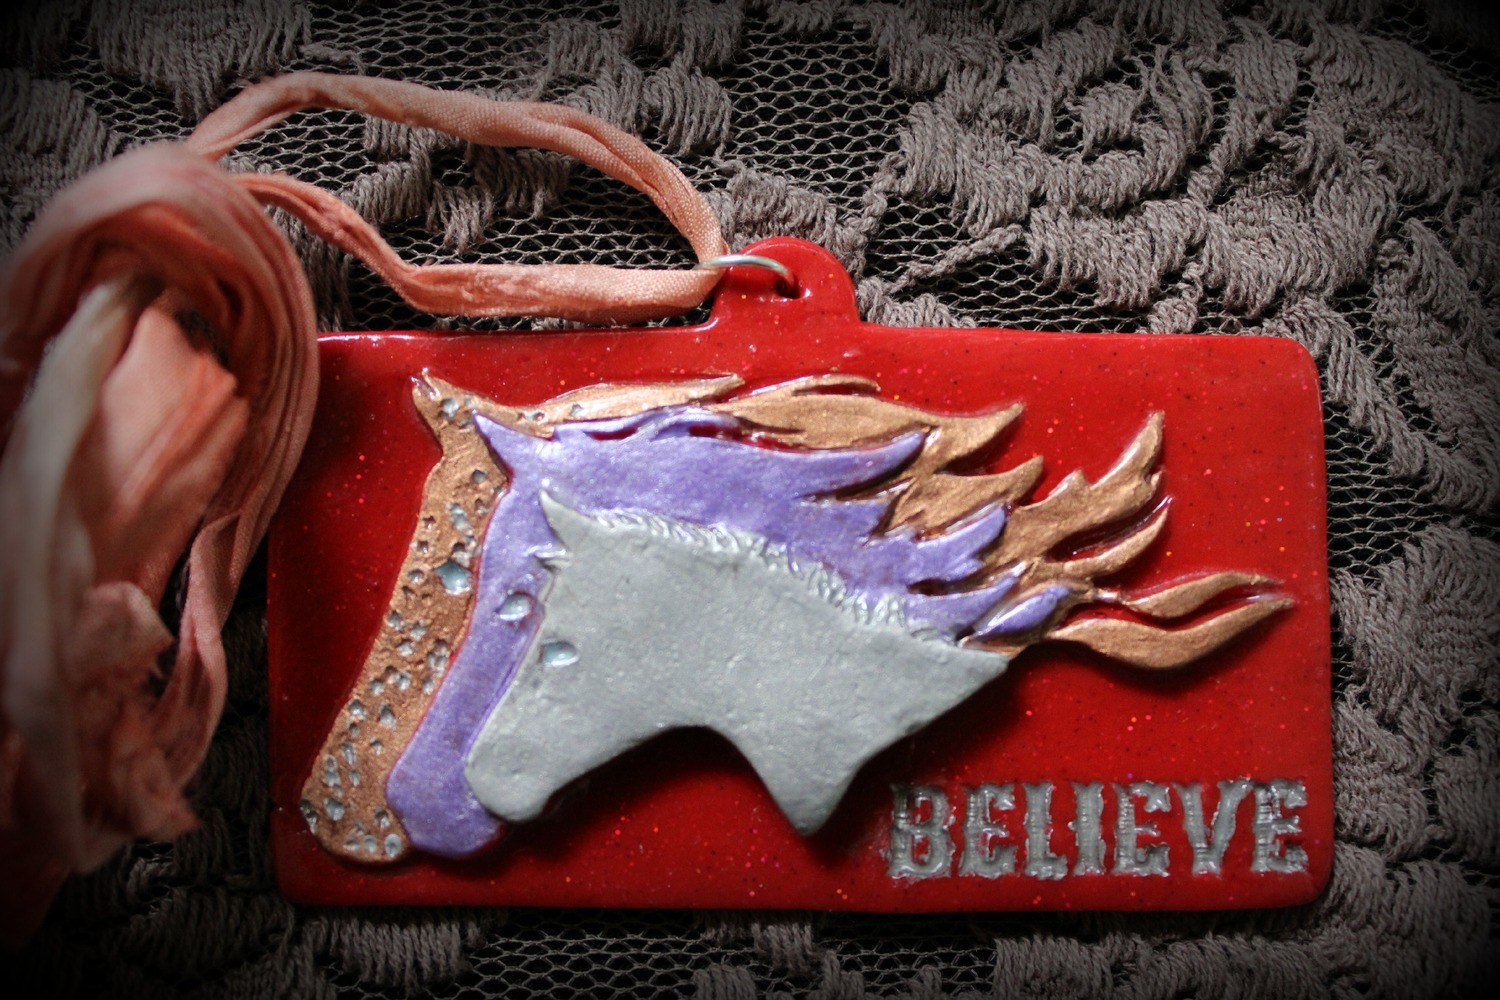 The Horse Mafia Company's Clay Pendant with Recycled Sari Ribbon and 24